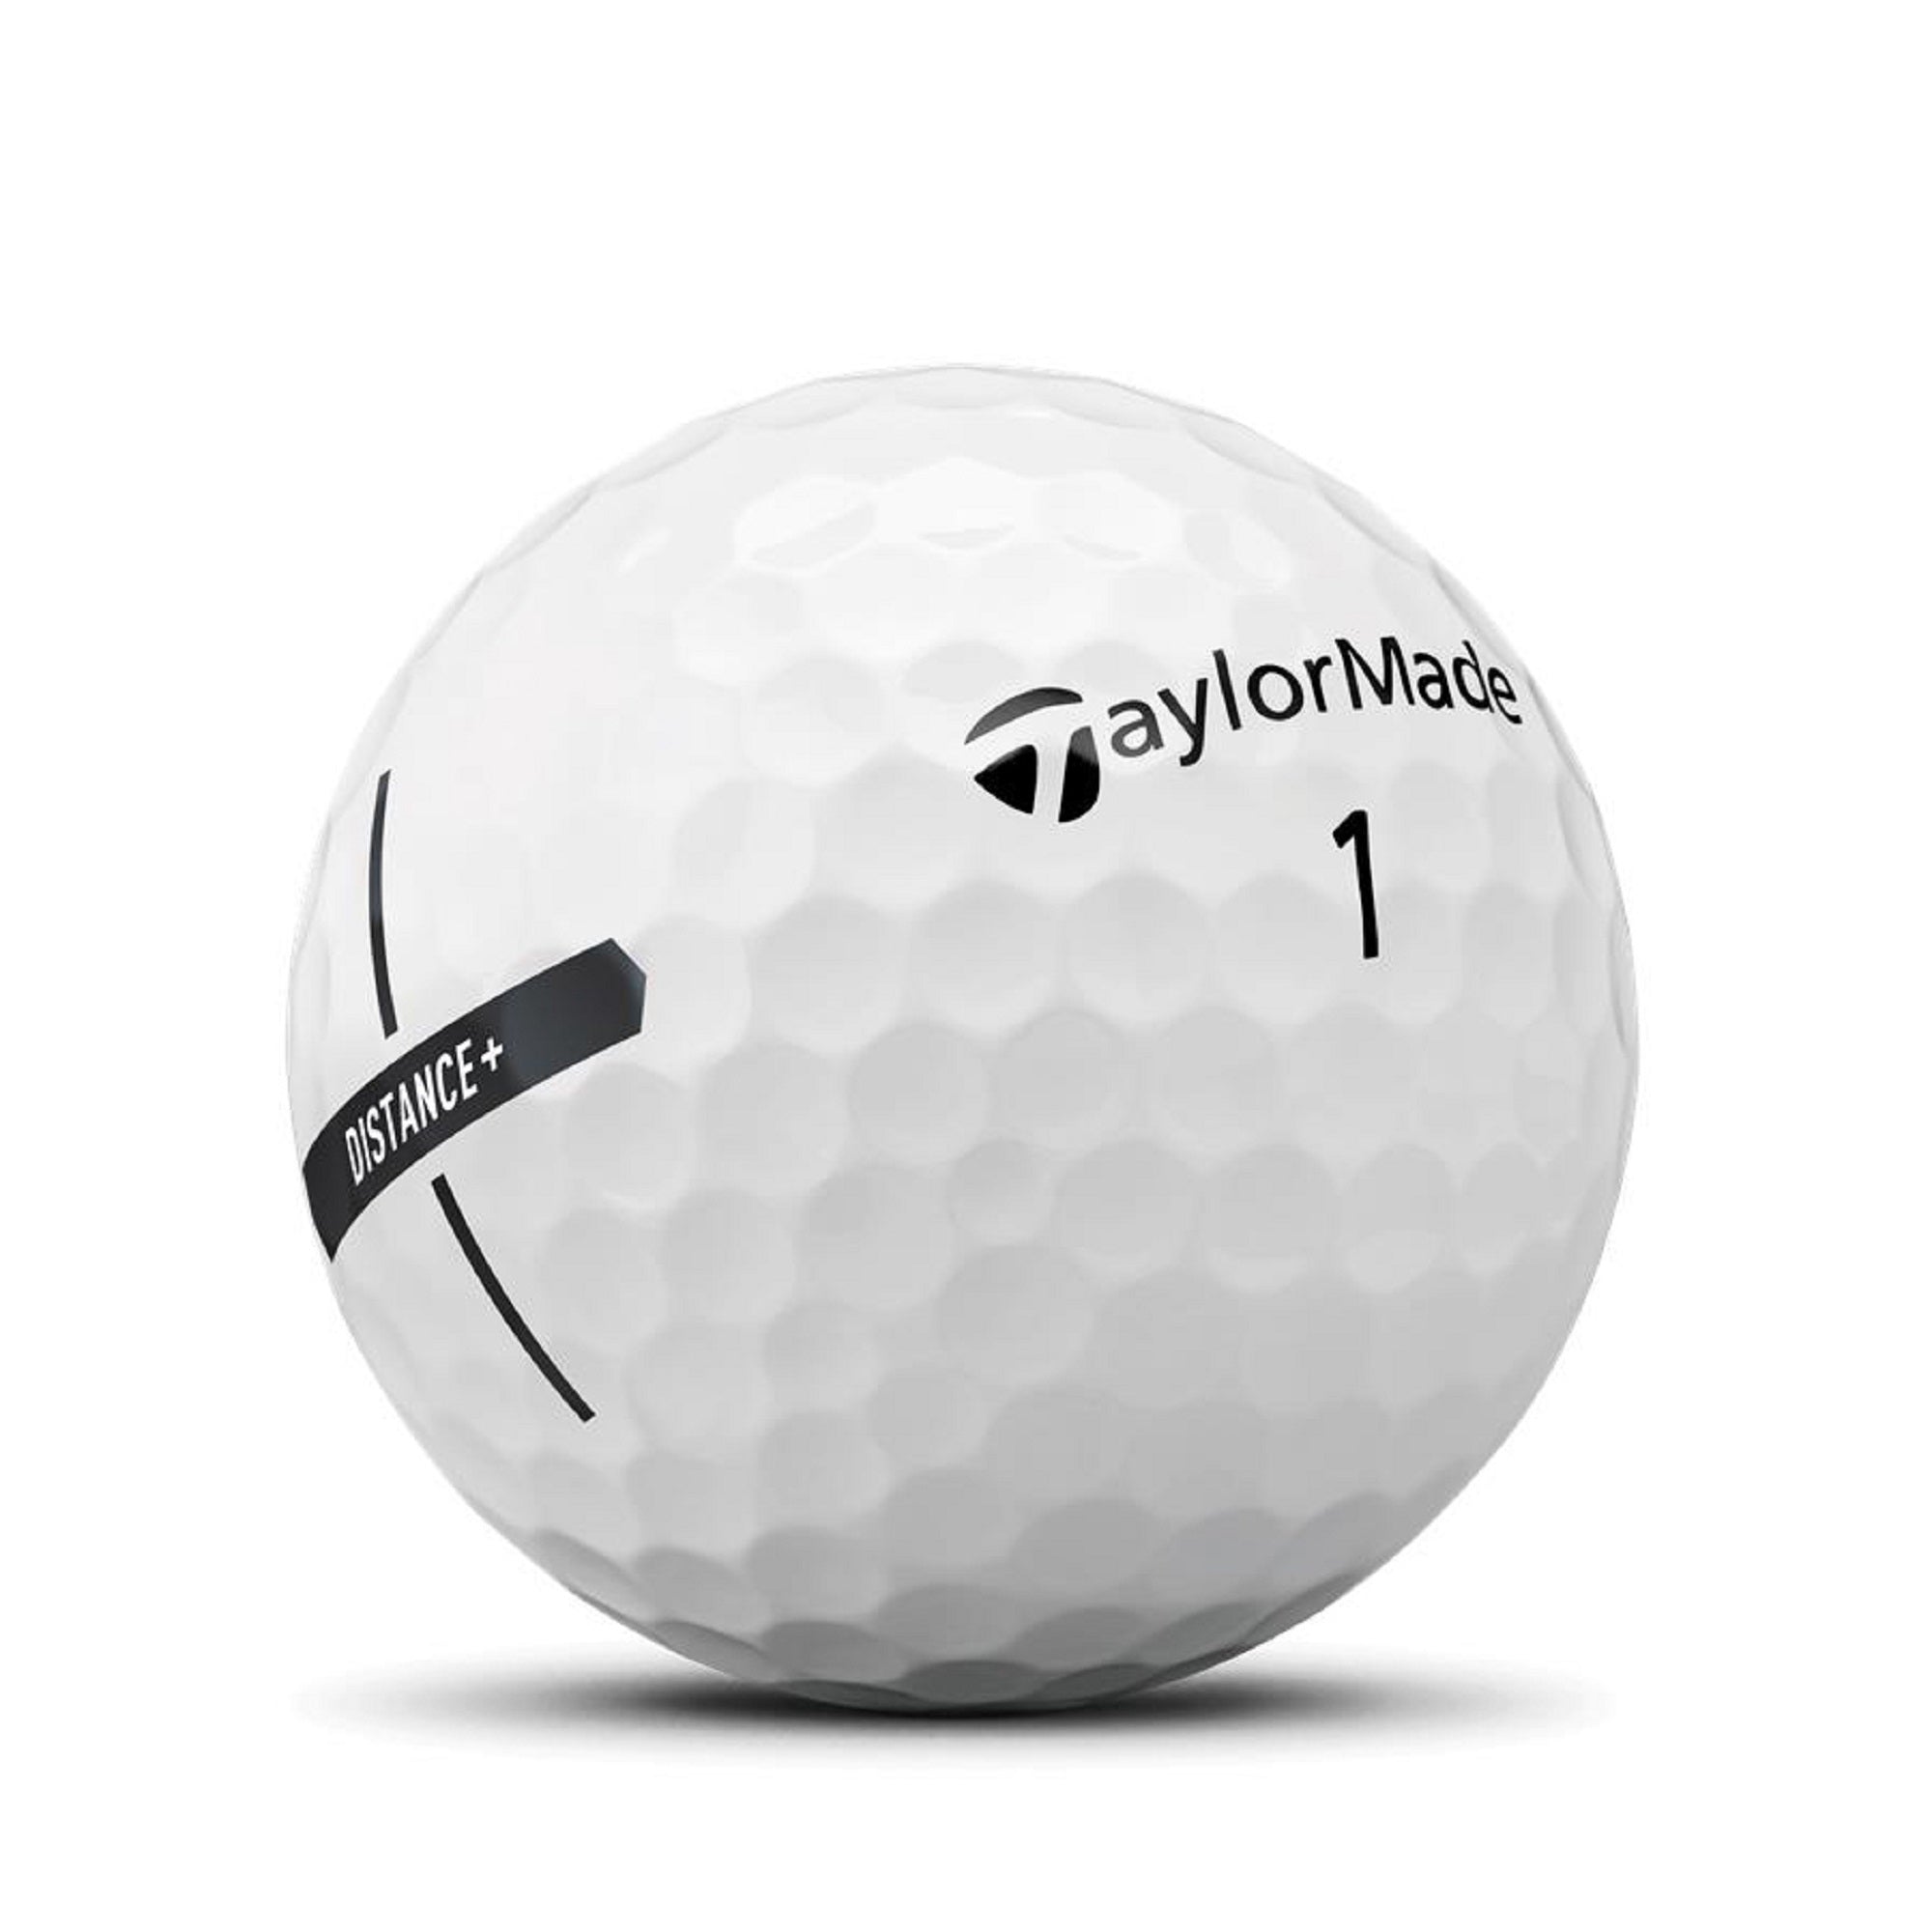 taylormade-distance-golf-balls-white